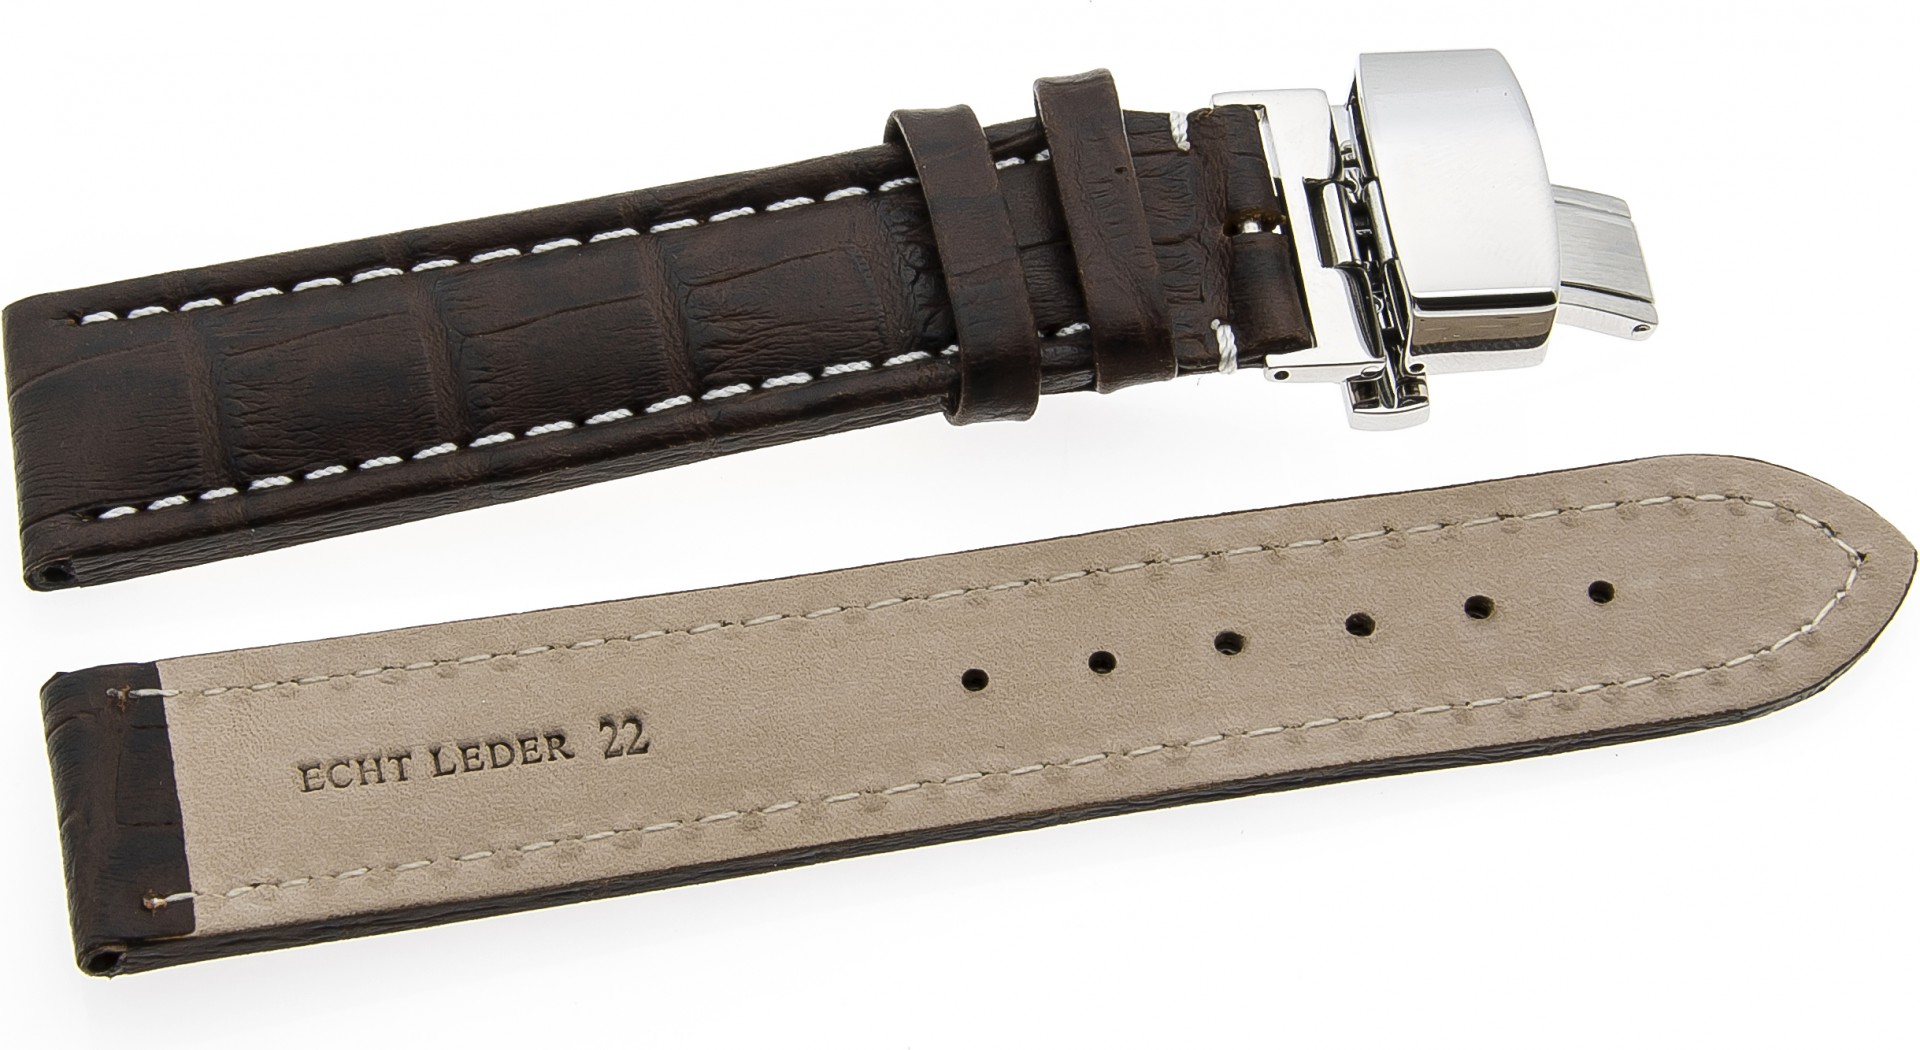   Uhrenarmband Kroko-Look Butterfly-Schließe - Leder, geprägt, XXL-Größen - dunkelbraun mit weißer Naht 